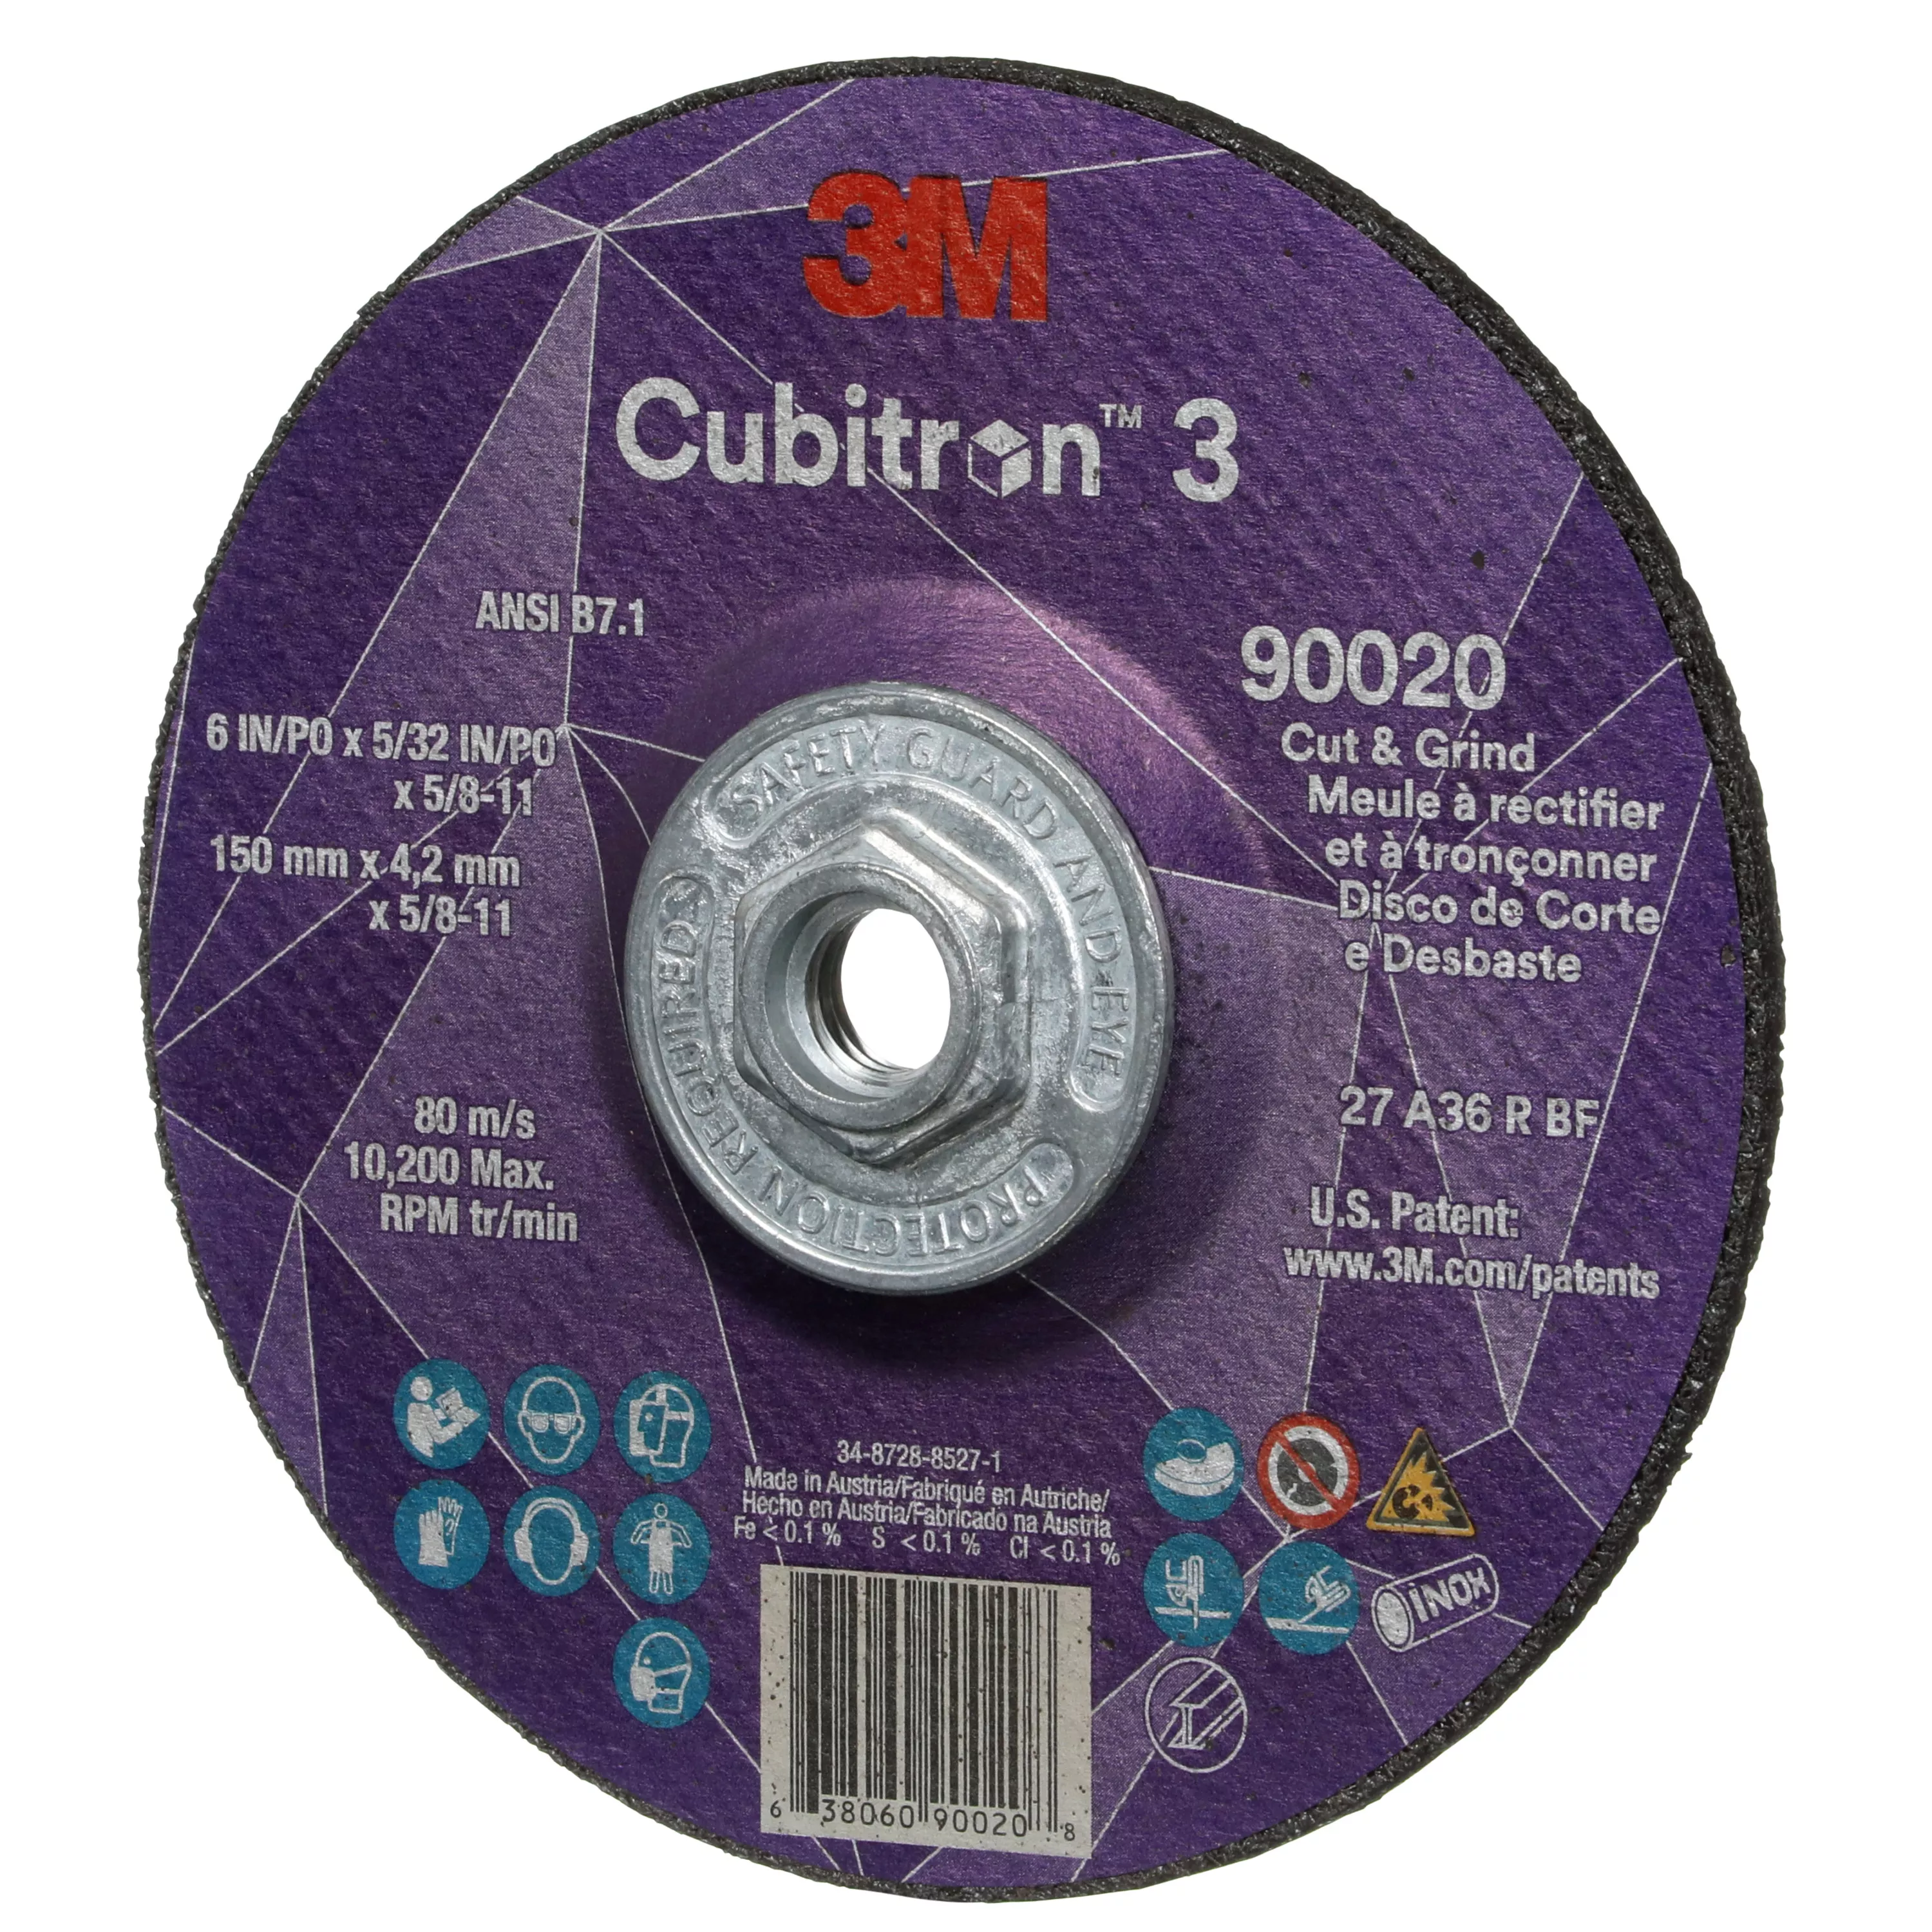 SKU 7100313196 | 3M™ Cubitron™ 3 Cut and Grind Wheel